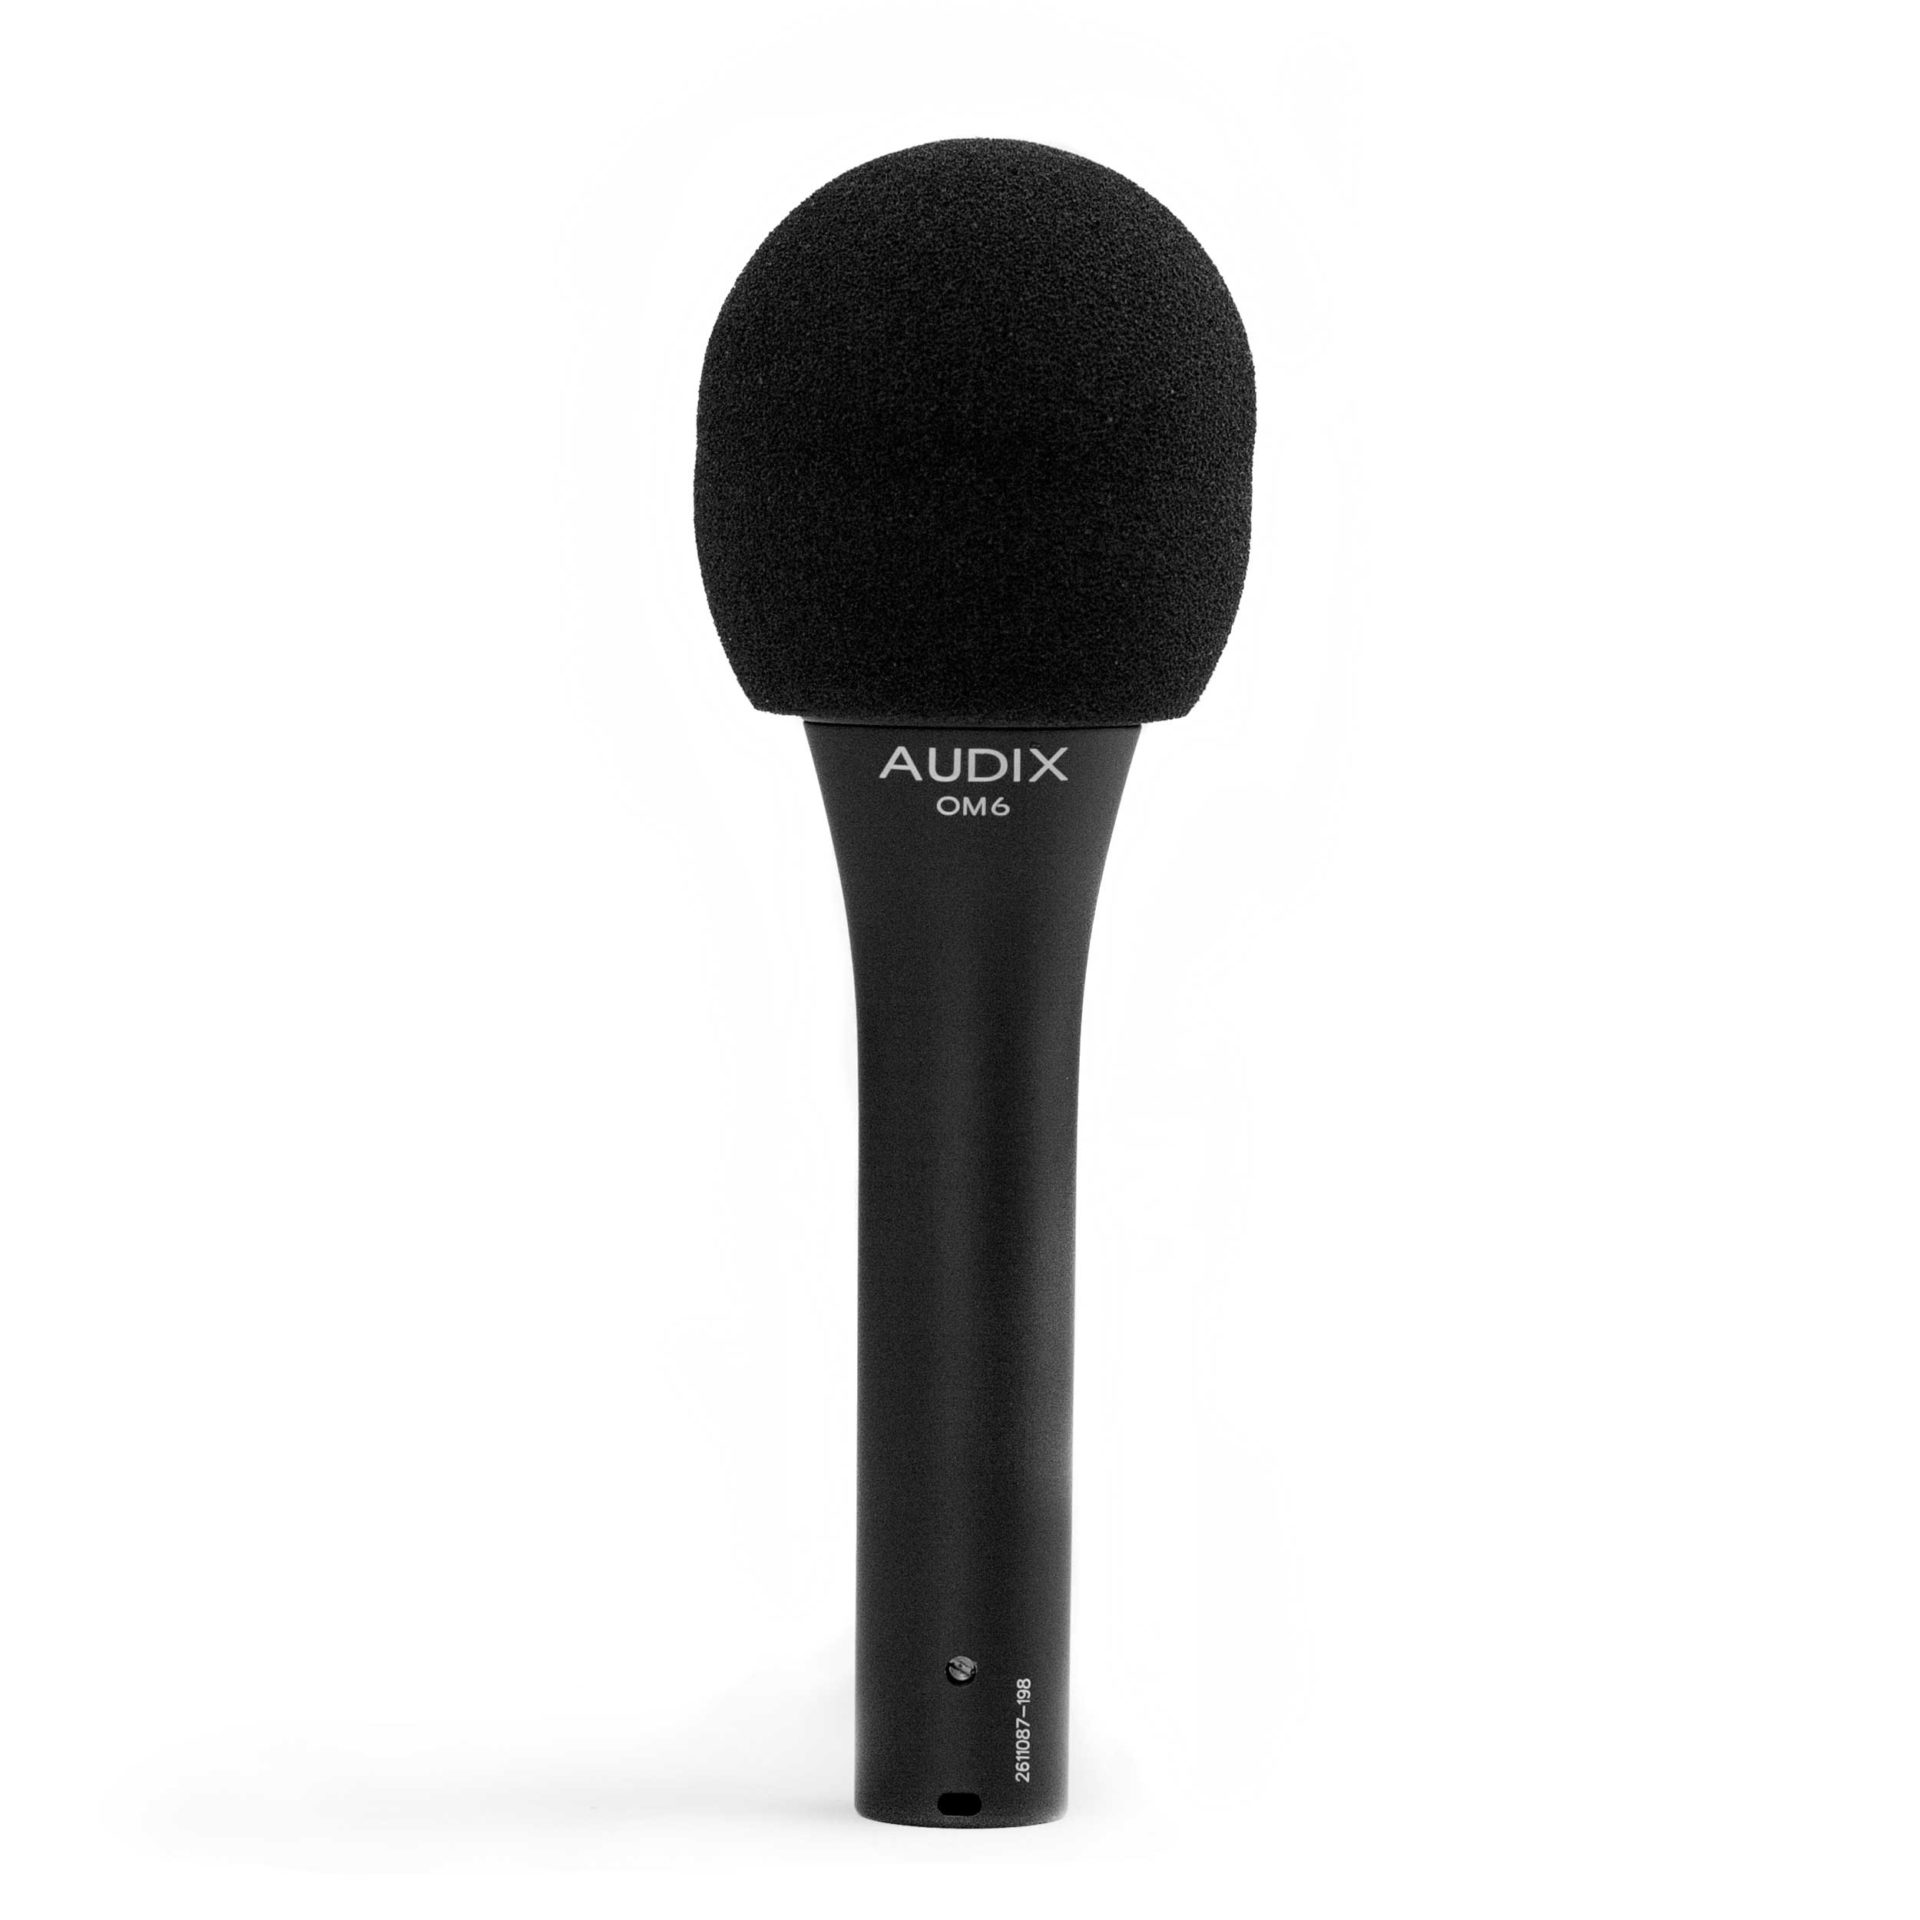 Audix OM6 Hypercardioid Dynamic Handheld Vocal Mic   Full Compass